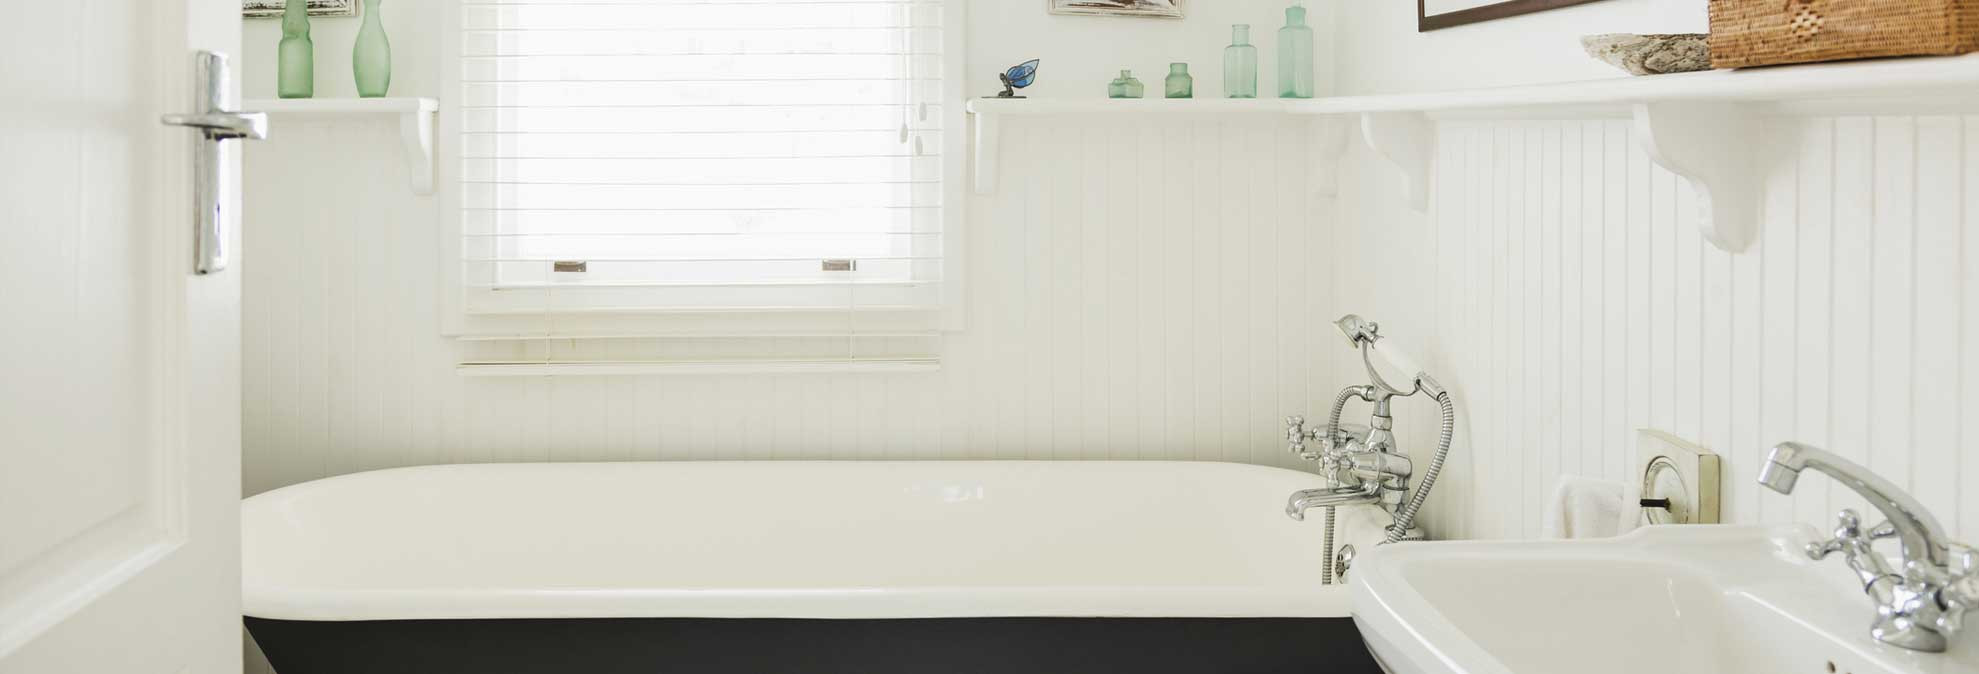 Mold Resistant Bathroom Paint
 Best Mildew Resistant Paint for Your Bathroom Consumer